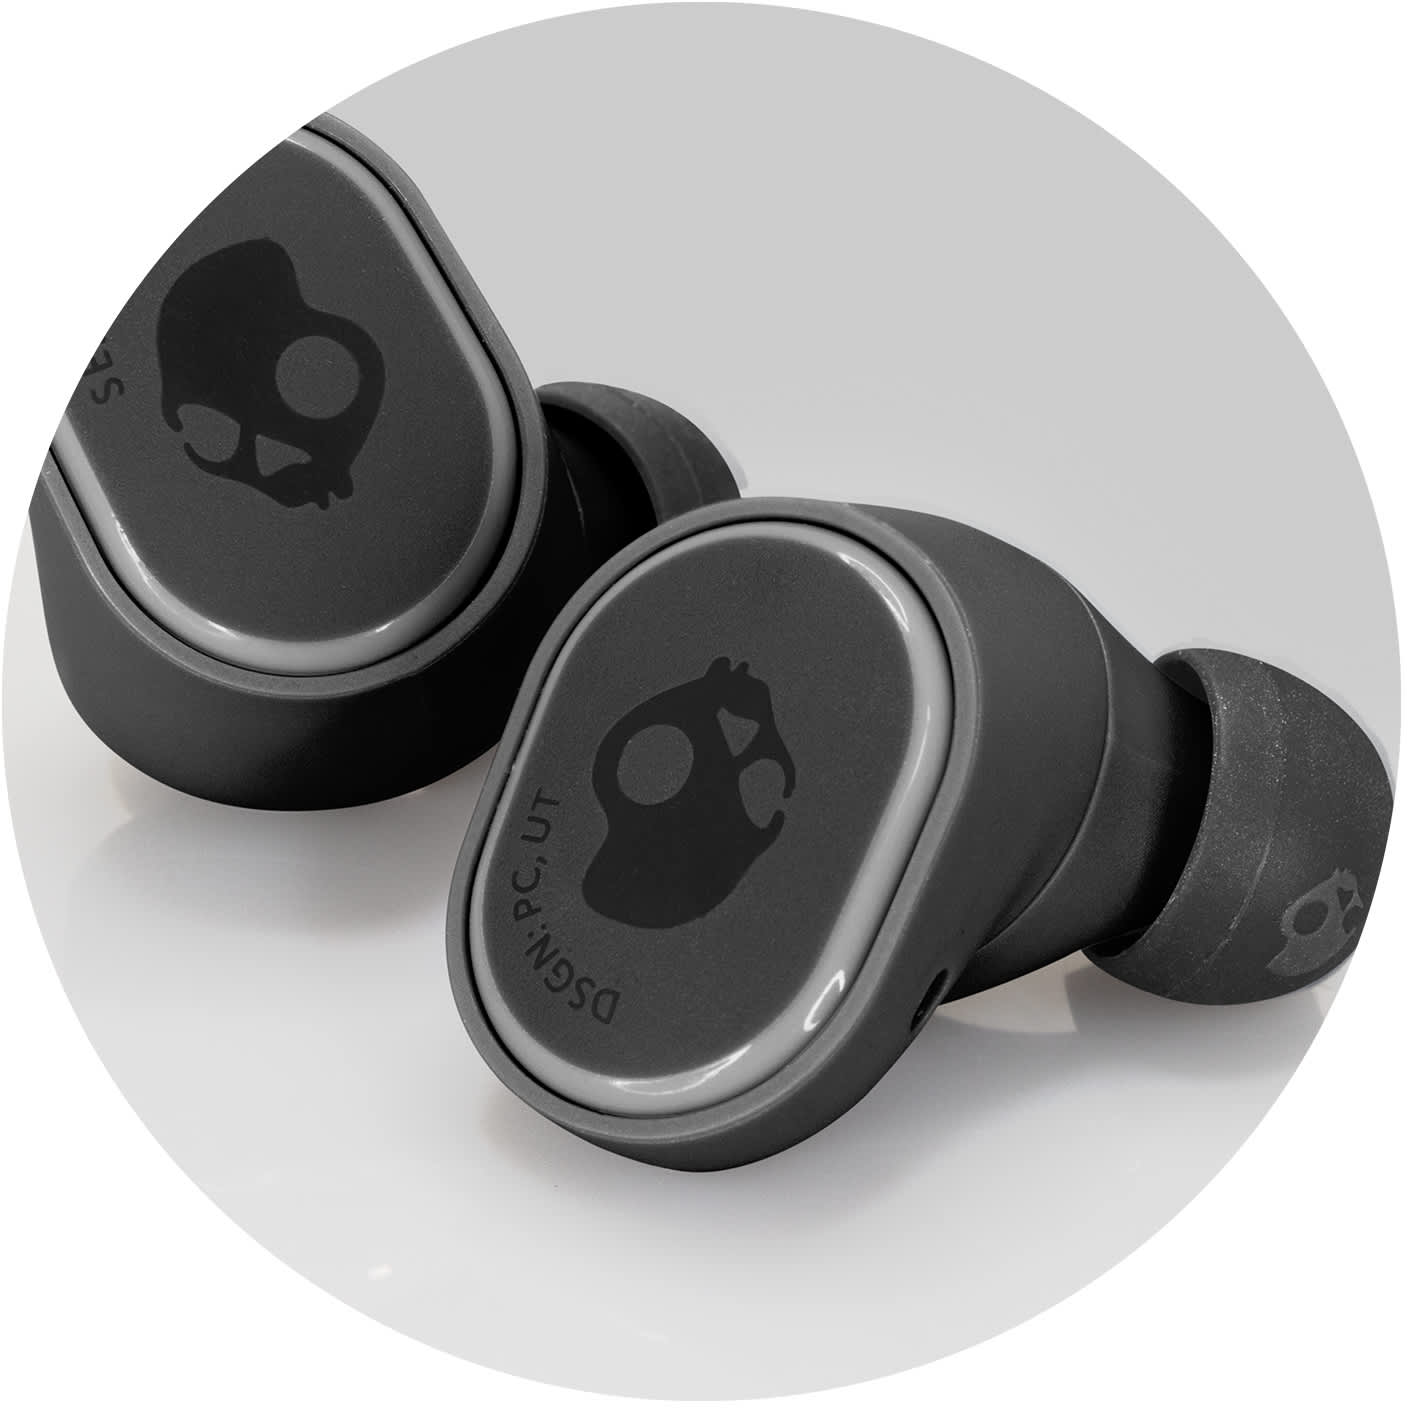 Skullcandy Sesh Evo True Wireless Earbuds